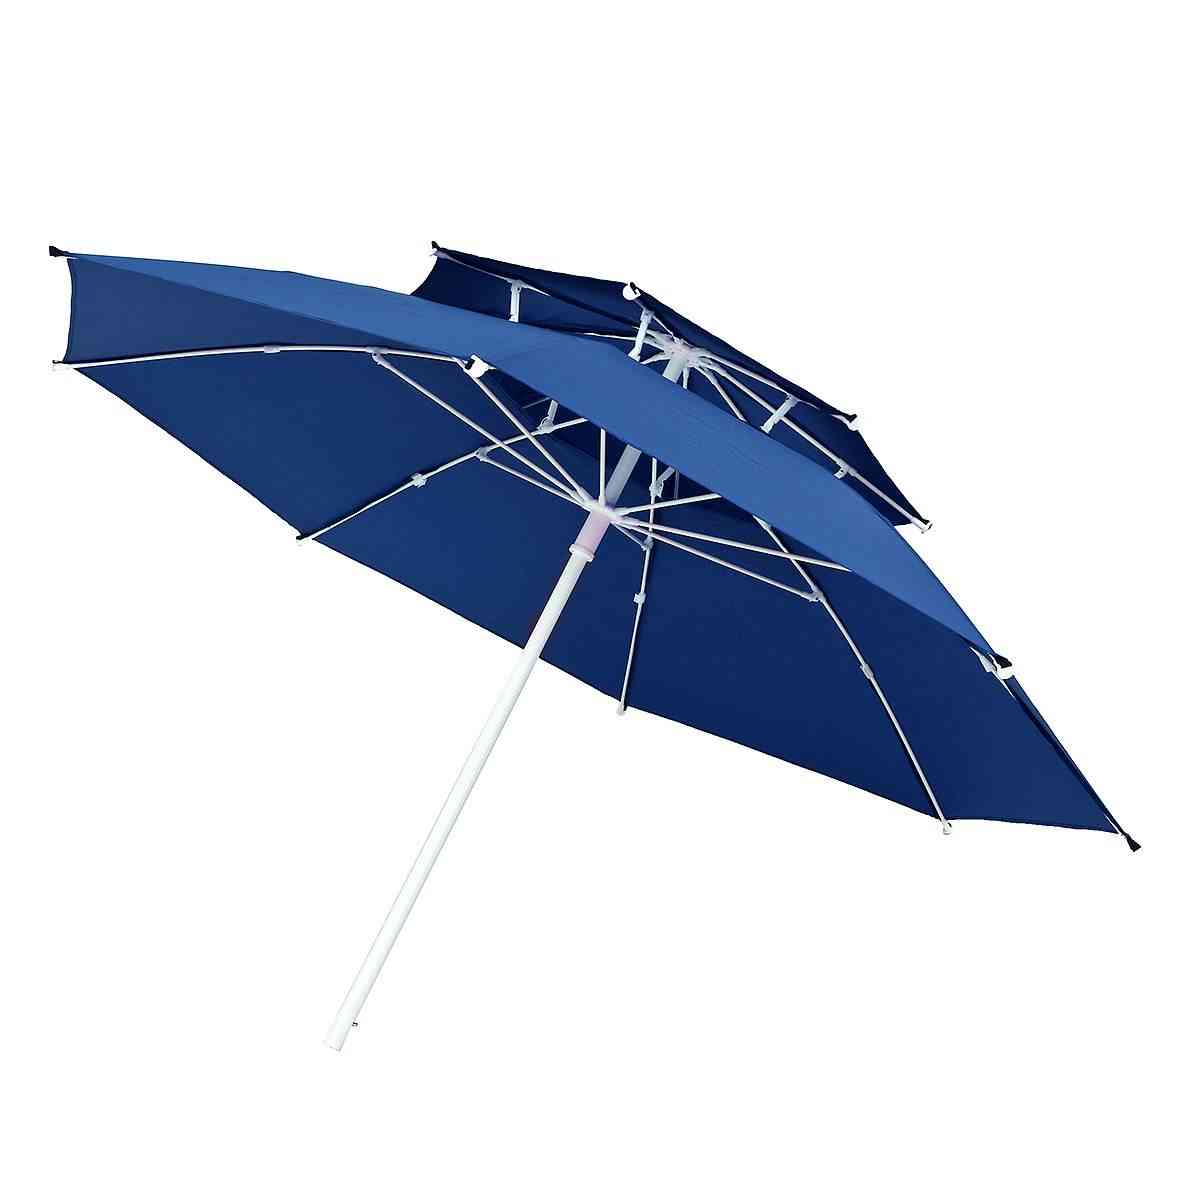 2,4 x 8 mm: n kaksikerroksinen aurinkovarjo